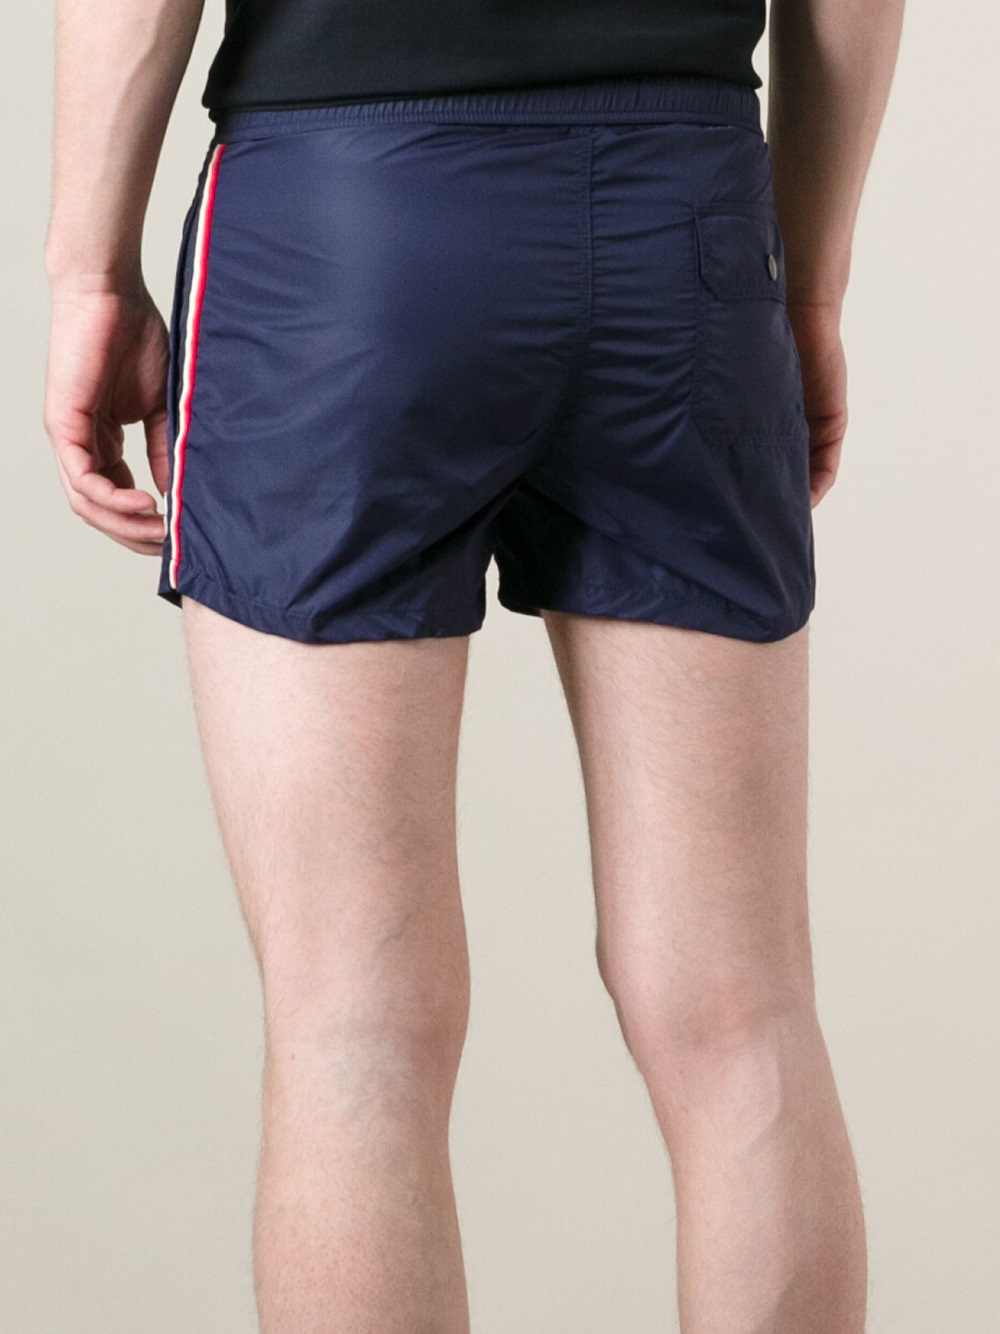 Moncler Tricolor Stripe Swim Shorts in Blue for Men - Lyst